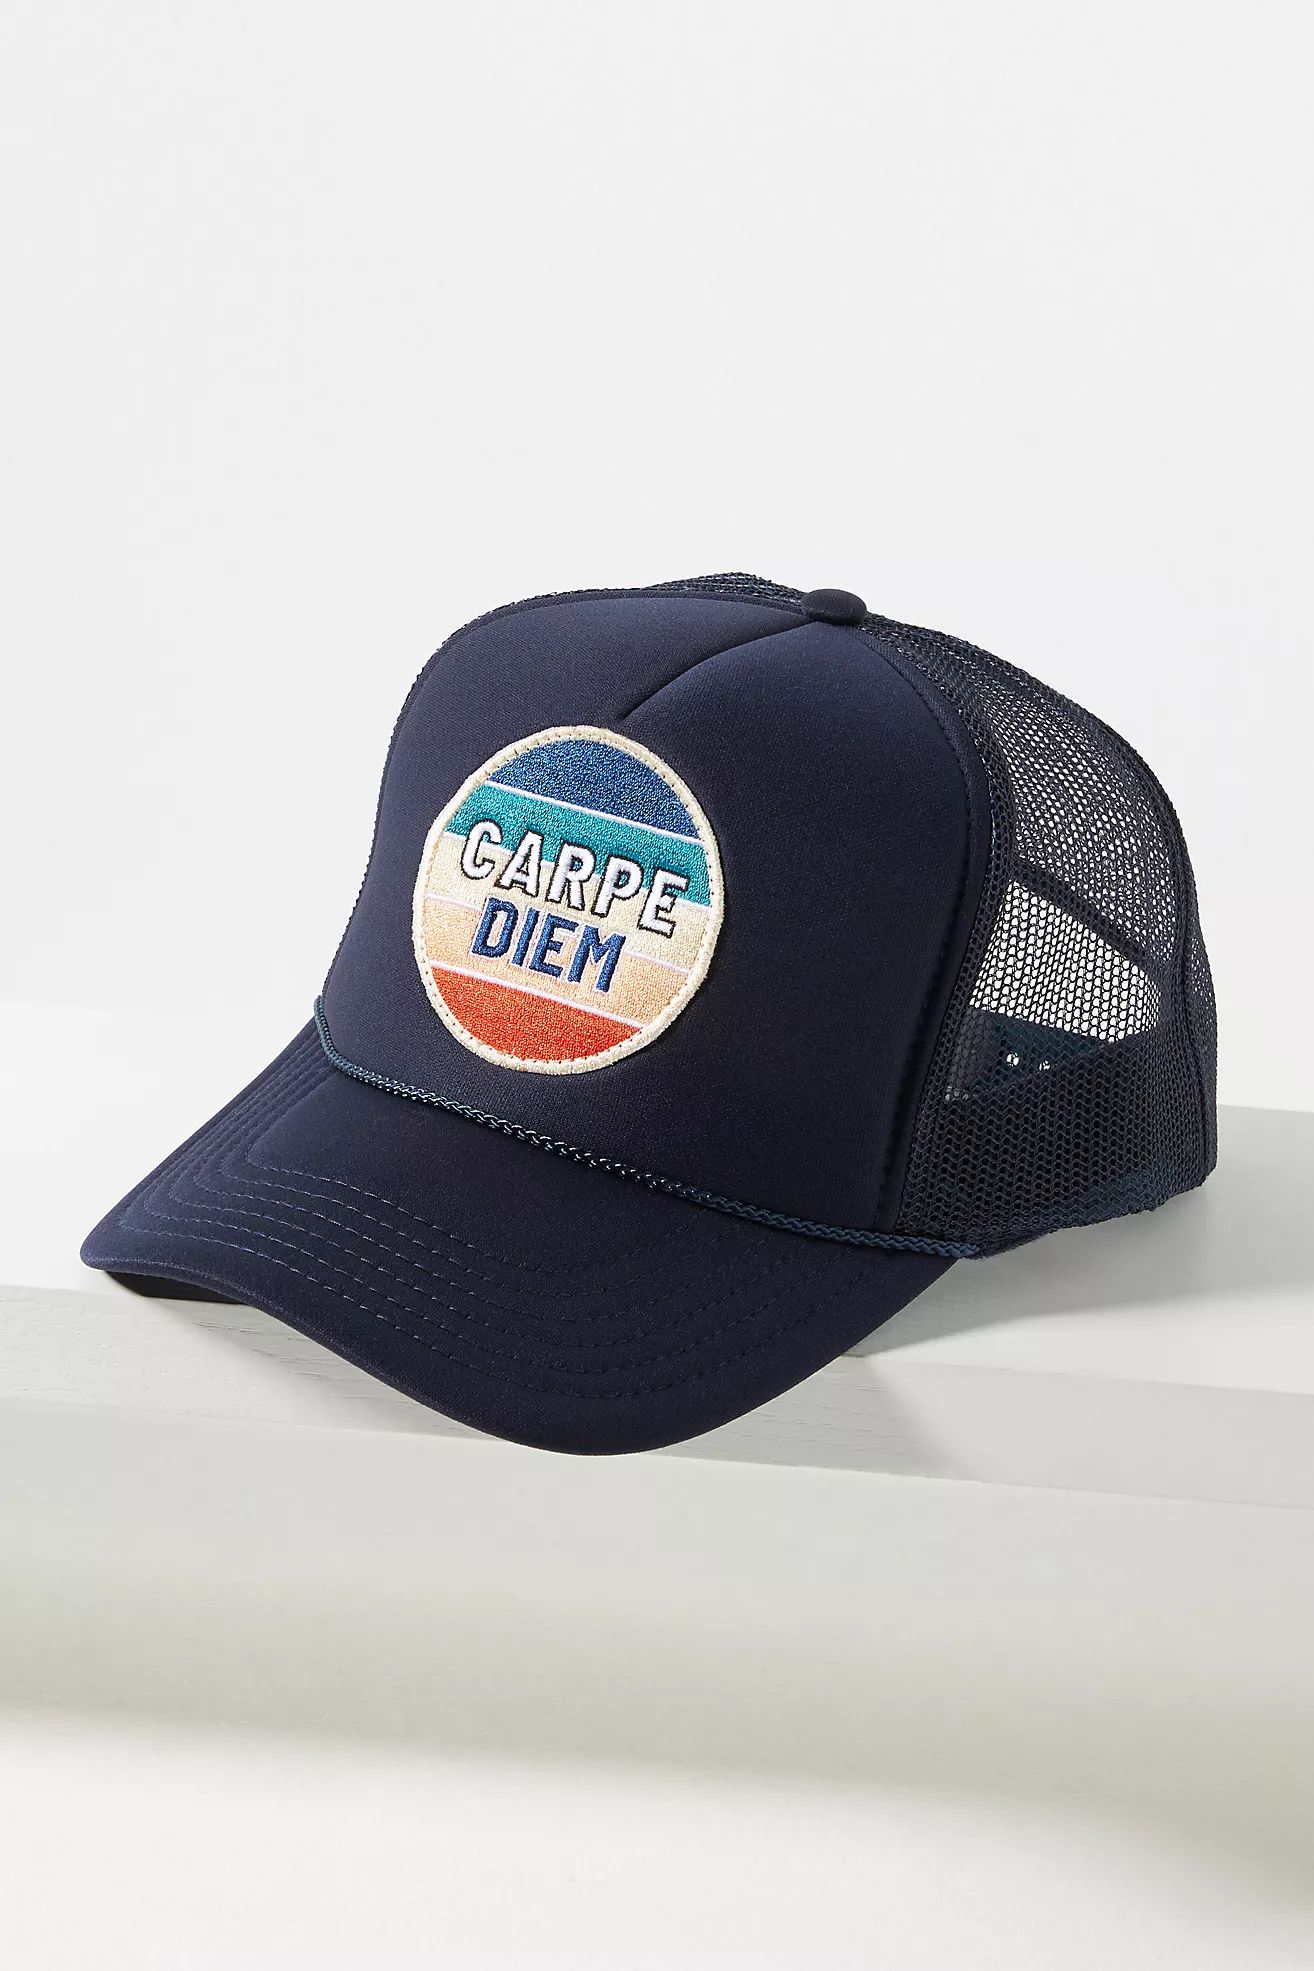 Friday Feelin Carpe Diem Trucker Hat | Anthropologie (US)